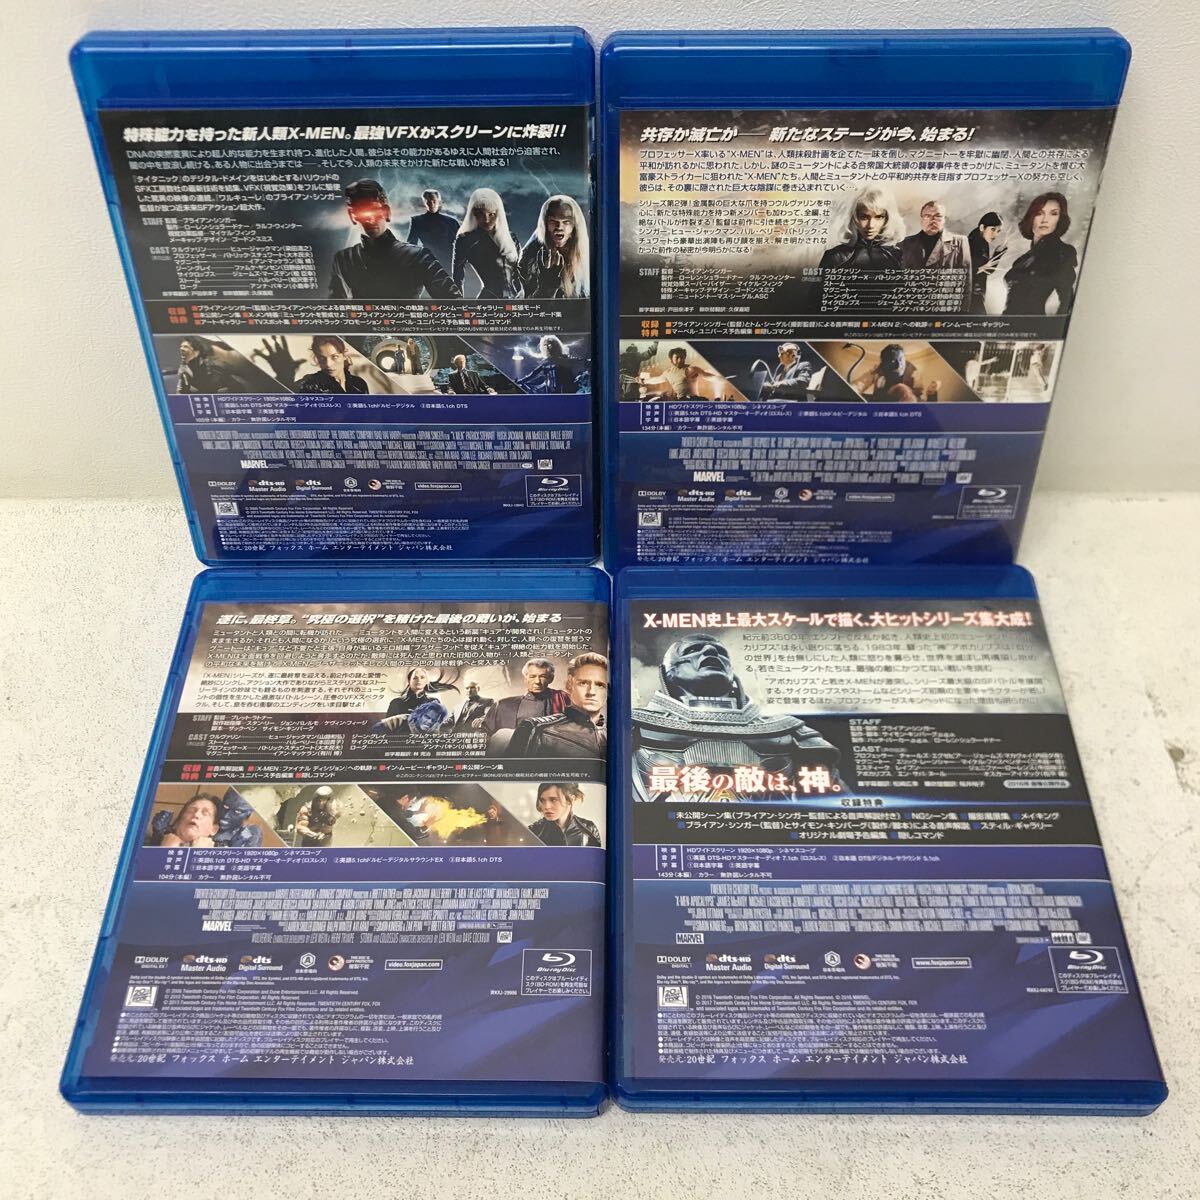 I0418B3 まとめ★X-MEN 8巻セット ブルーレイ Blu-ray 映画 洋画 セル版 / アポカリプス / ファイナル・ディシジョン / SAMURAI 他の画像4